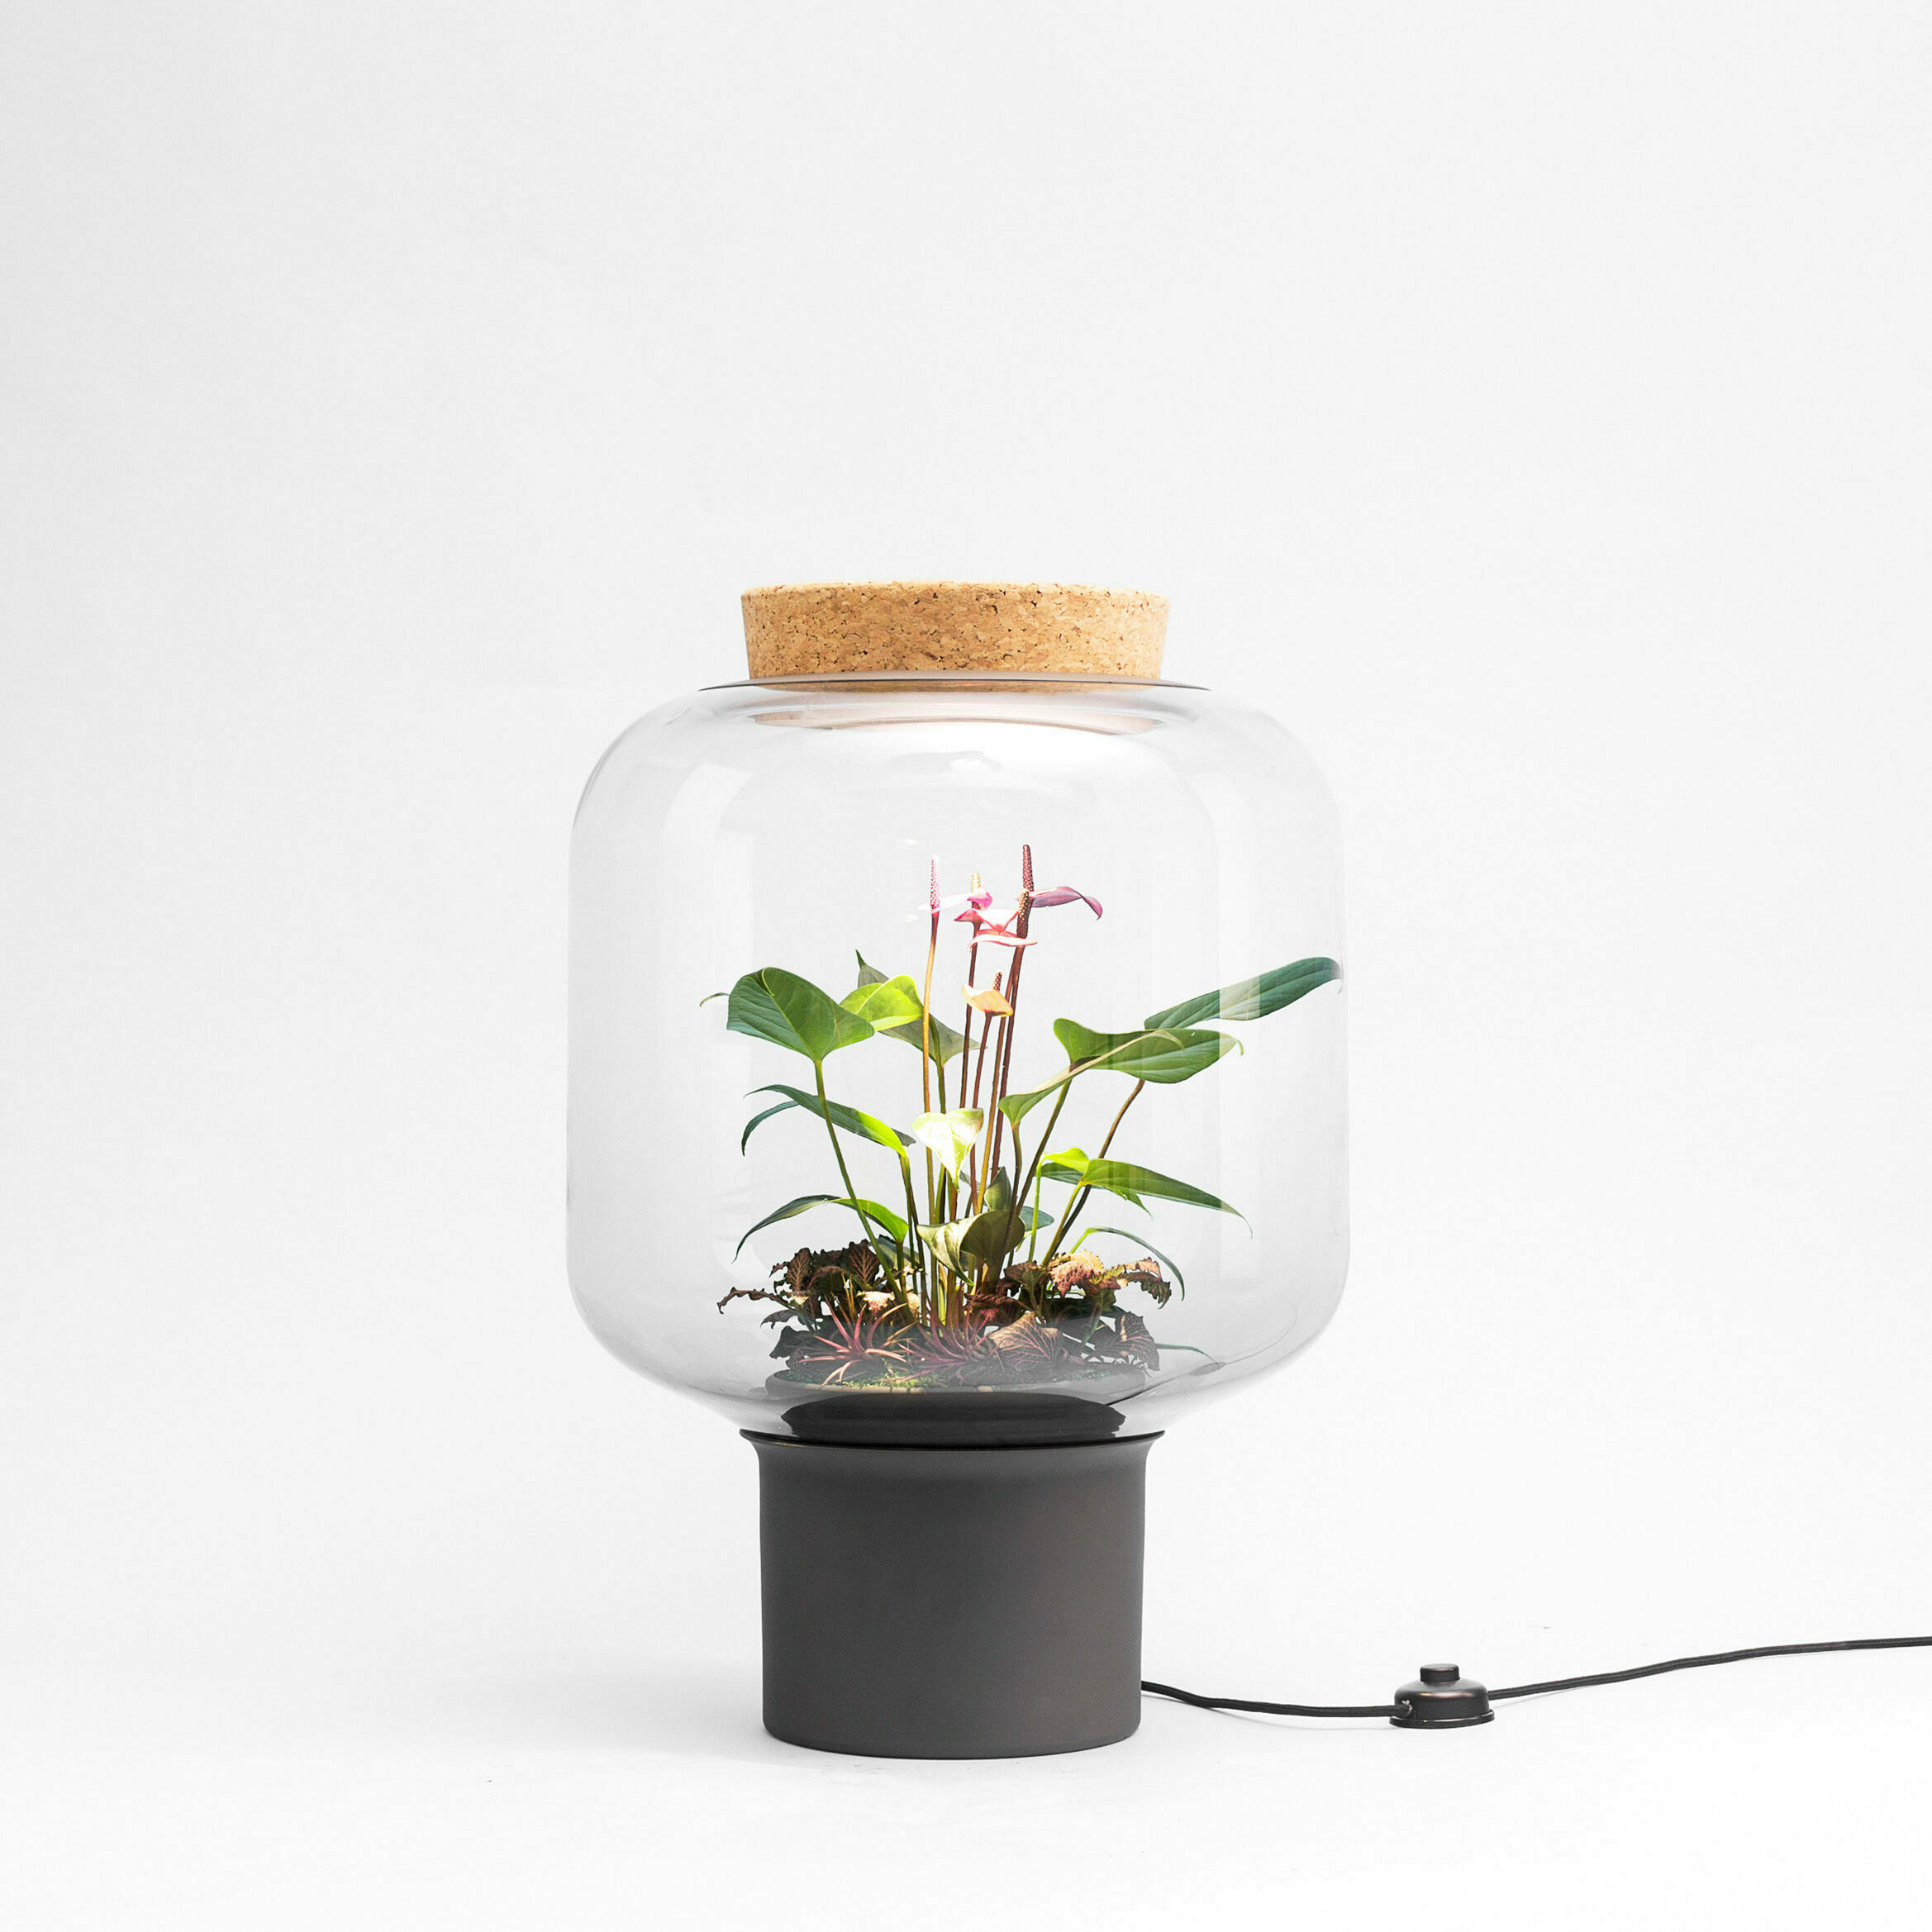 mygdal lamp nui studio lampe pflanzengefaess design inneneinrichtung einrichtungsidee